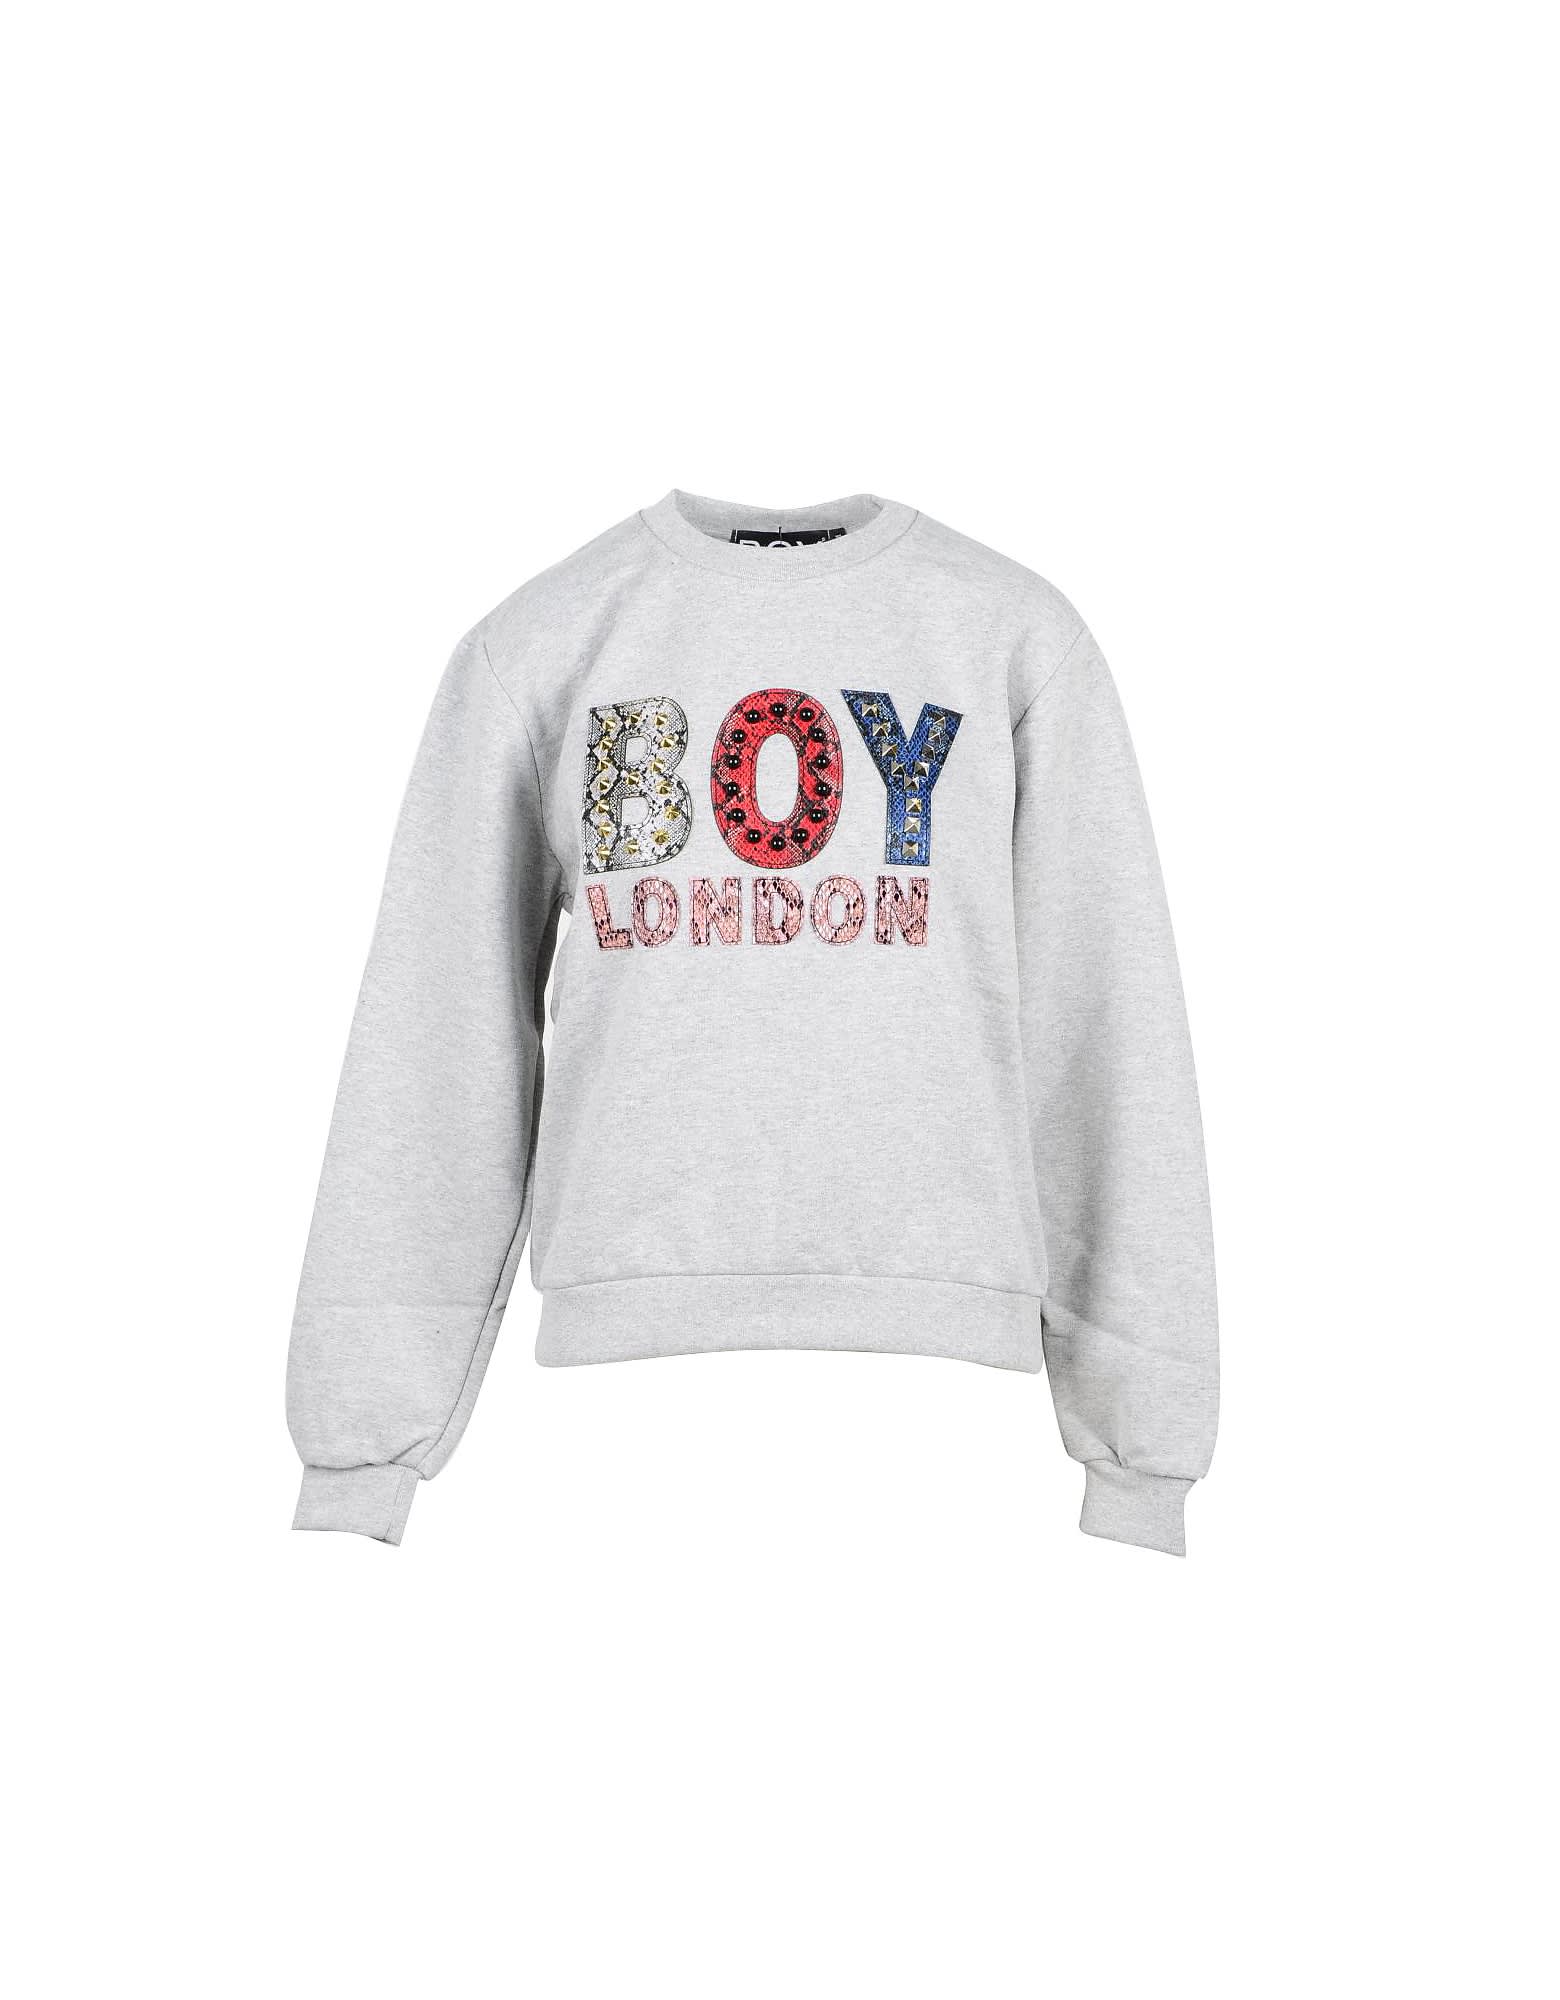 Boy London Womens Gray Sweatshirt